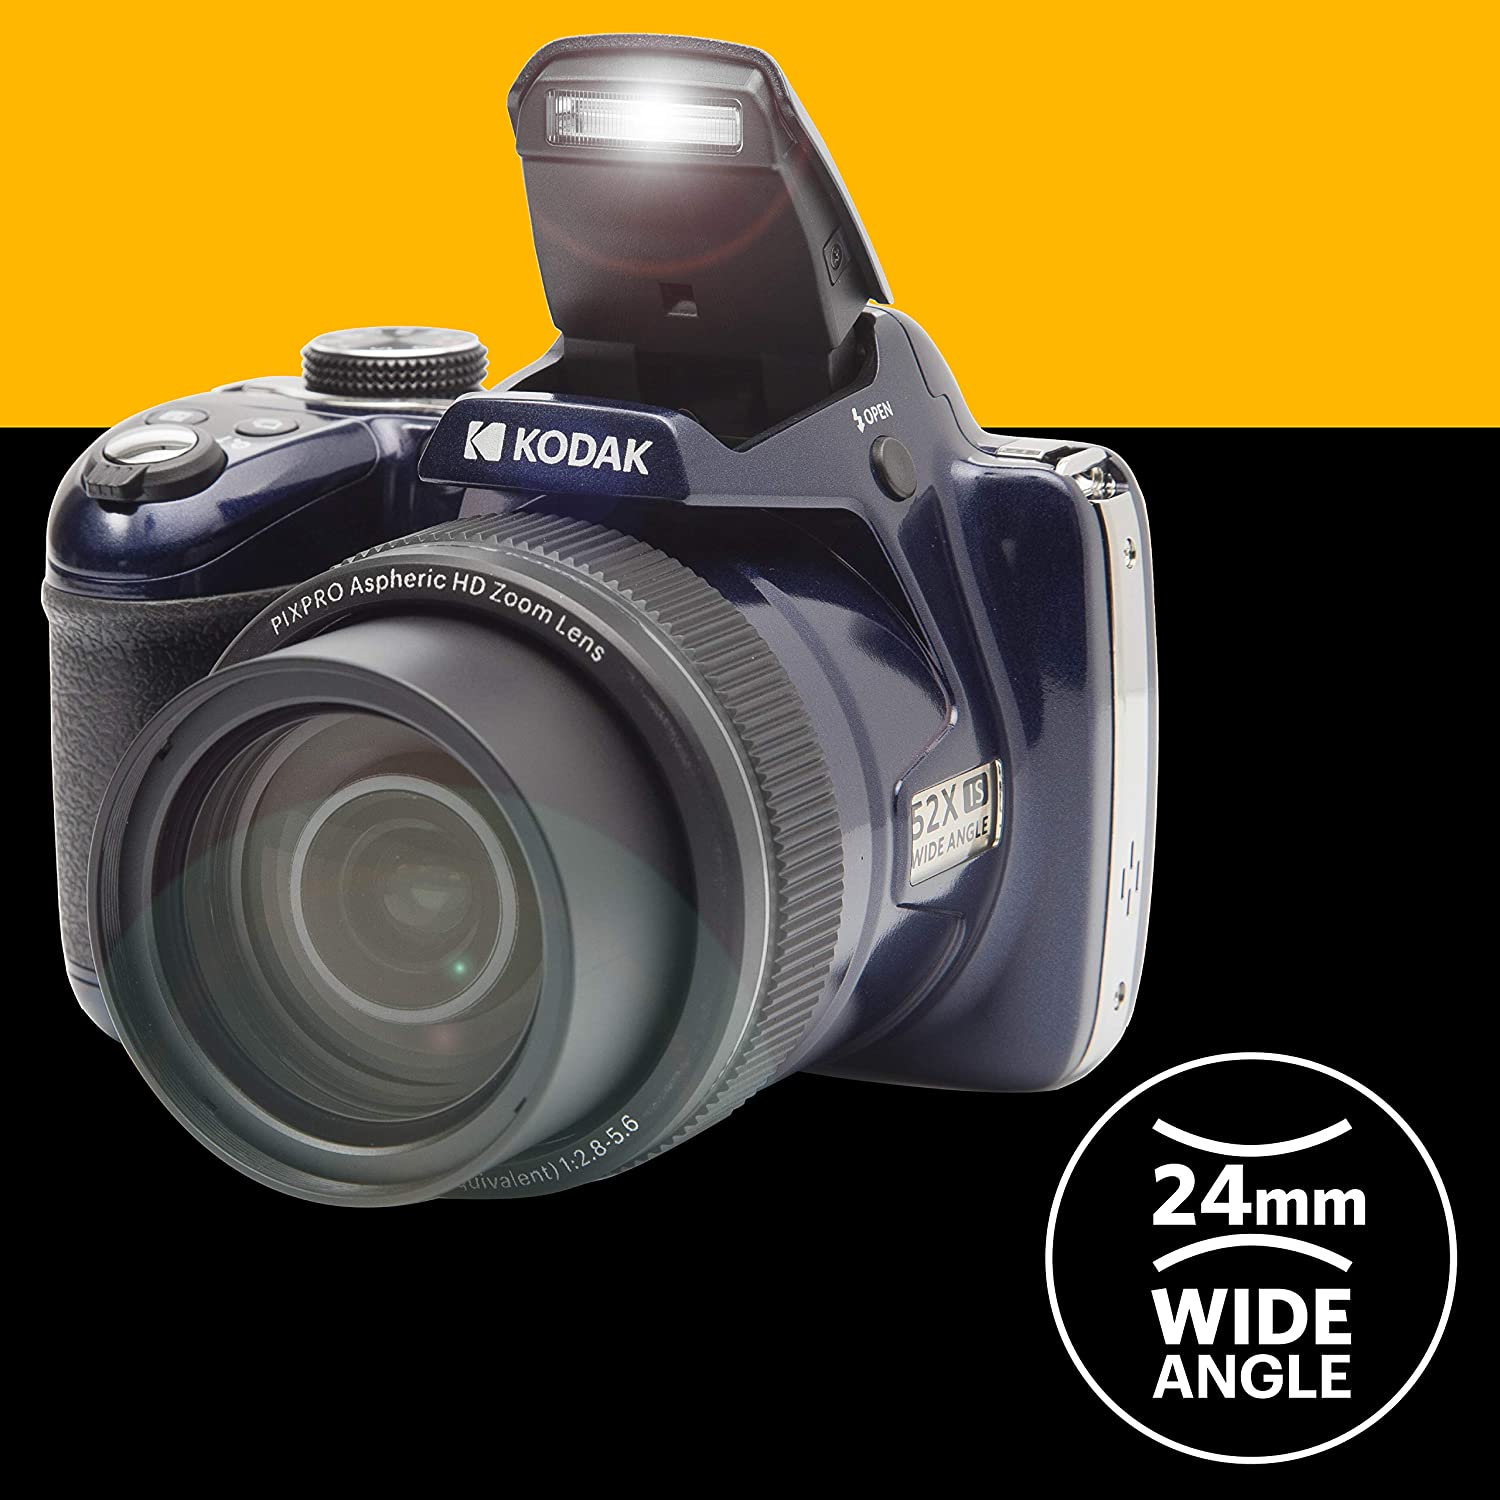 KODAK PIXPRO AZ528 Astro Zoom Digital Bridge Camera - Midnight Blue